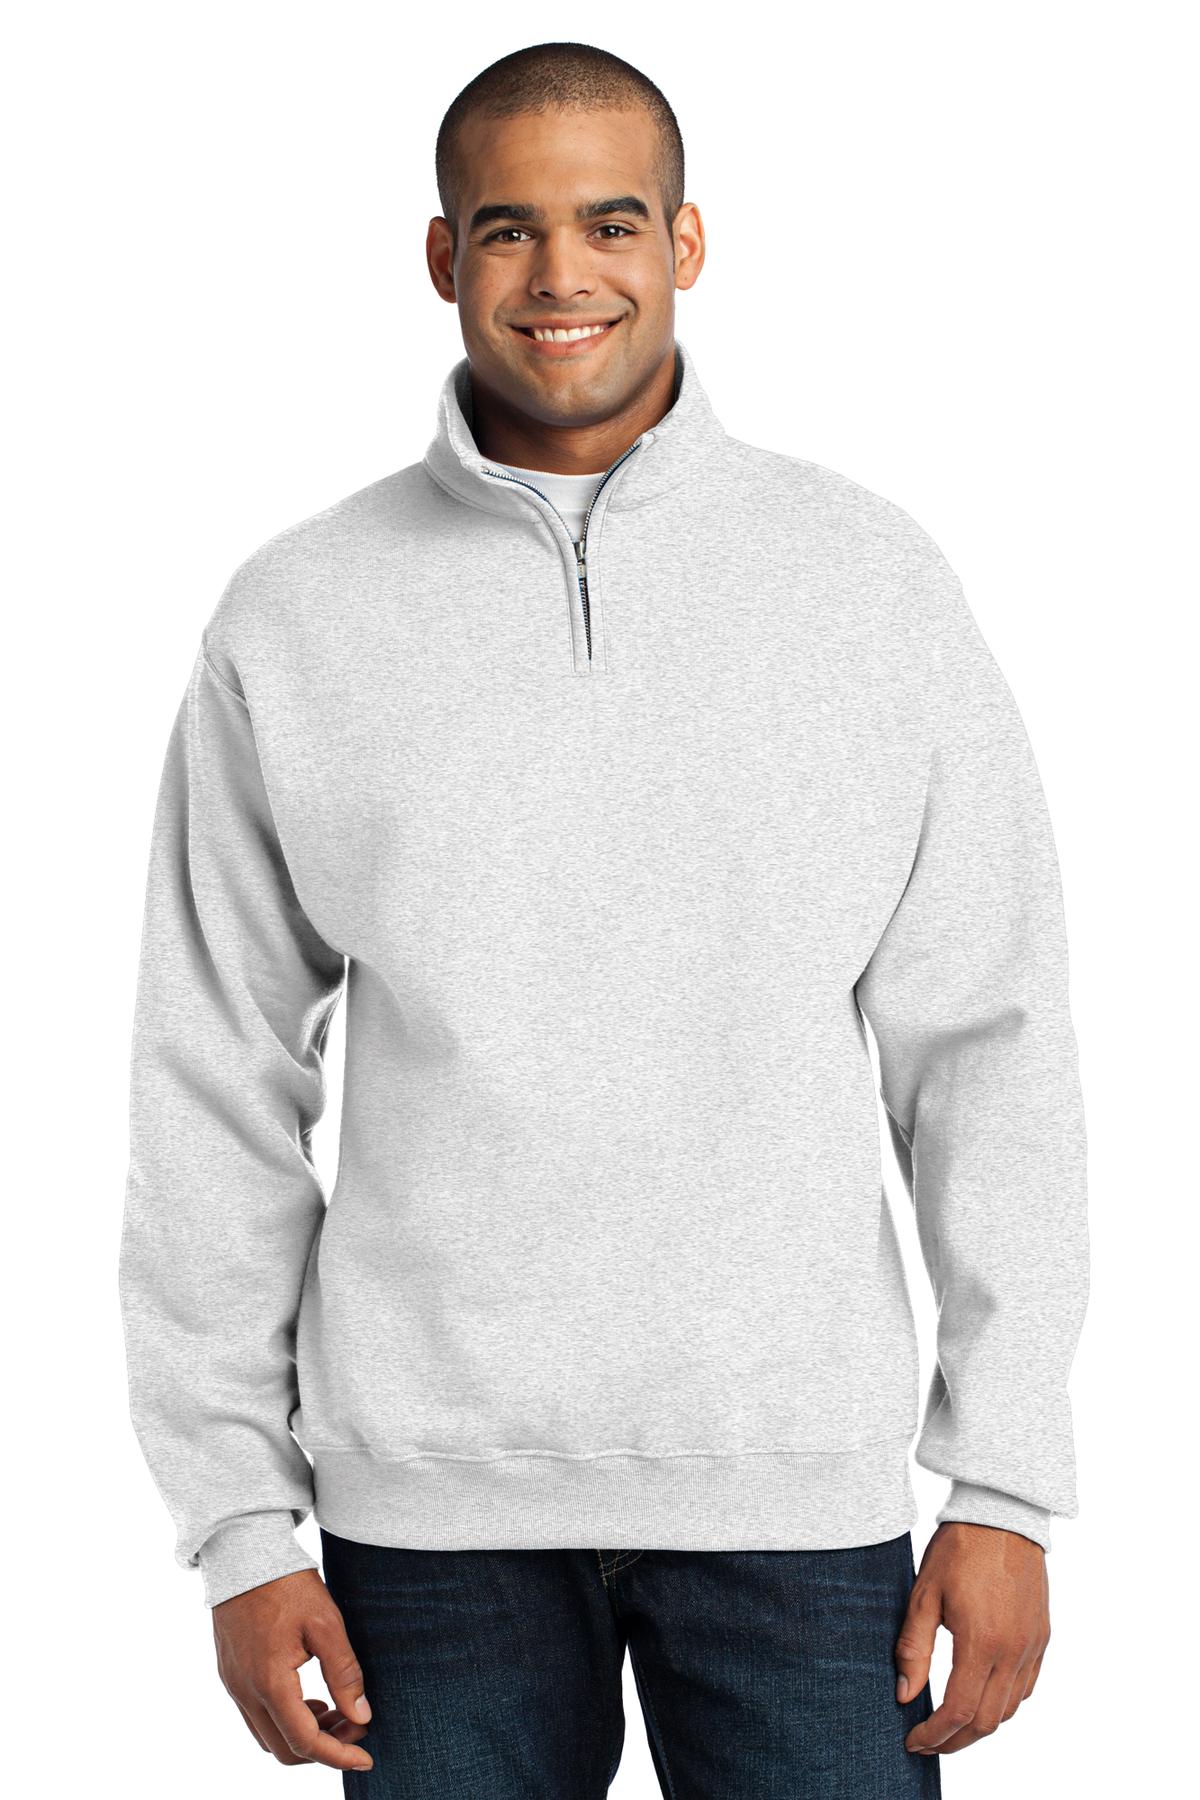 Category Sweatshirts/Fleece Products - in focUS apparel